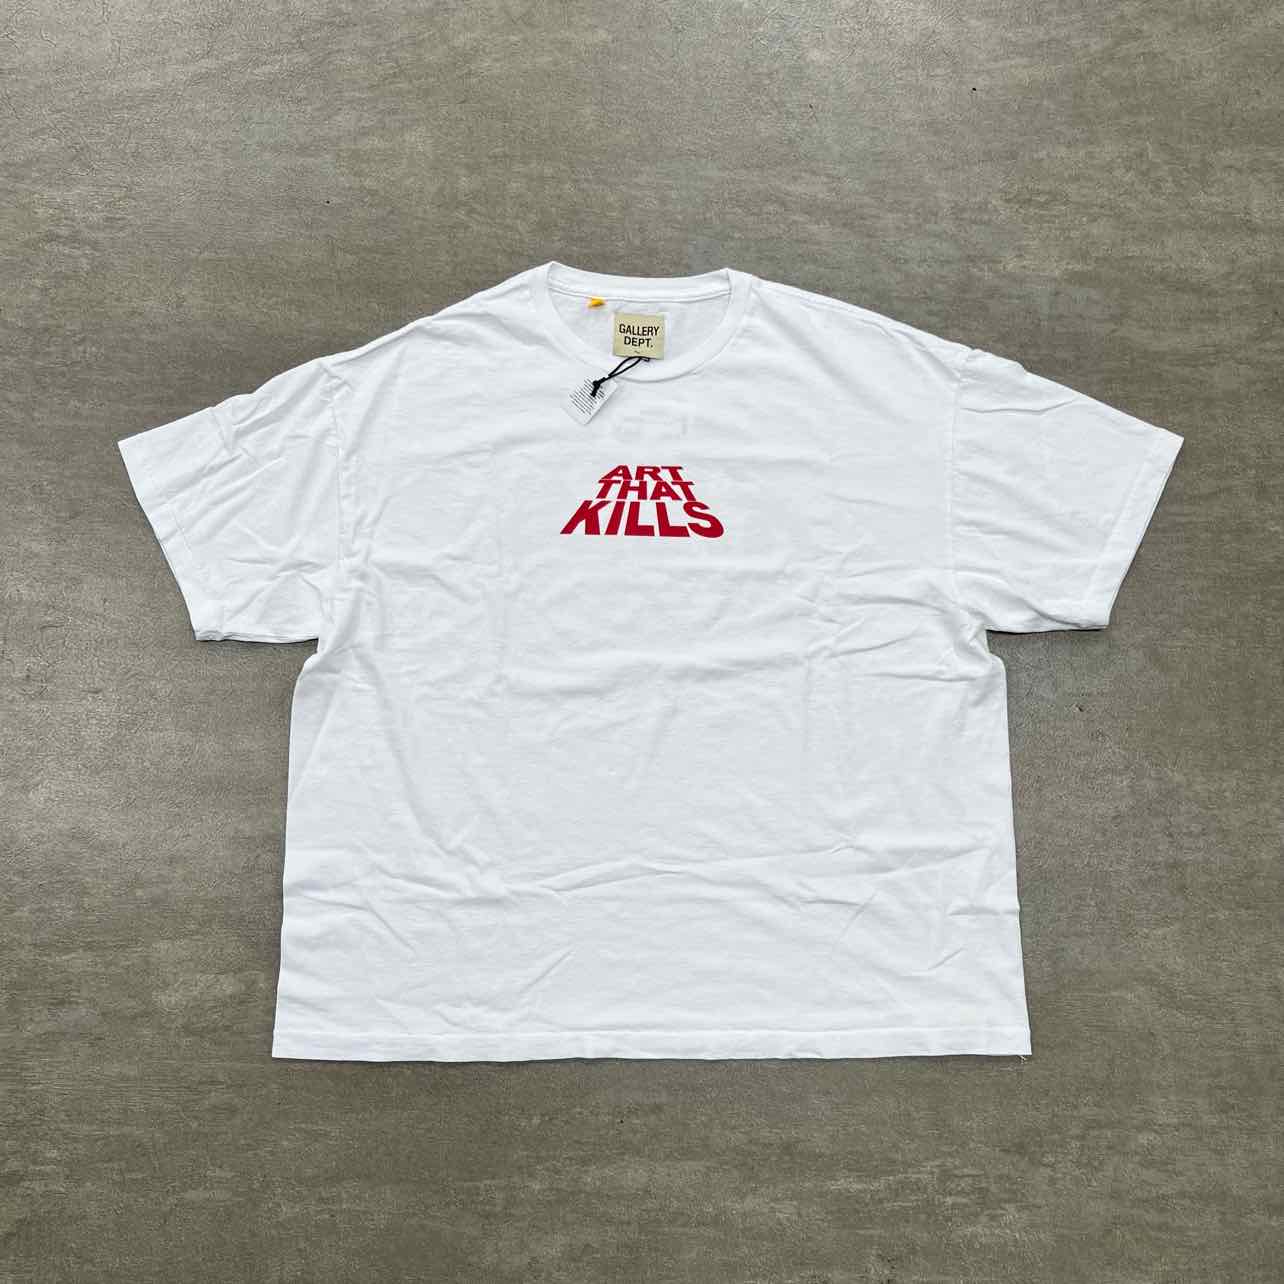 Gallery DEPT. T-Shirt "ART THAT KILLS" White New Size M